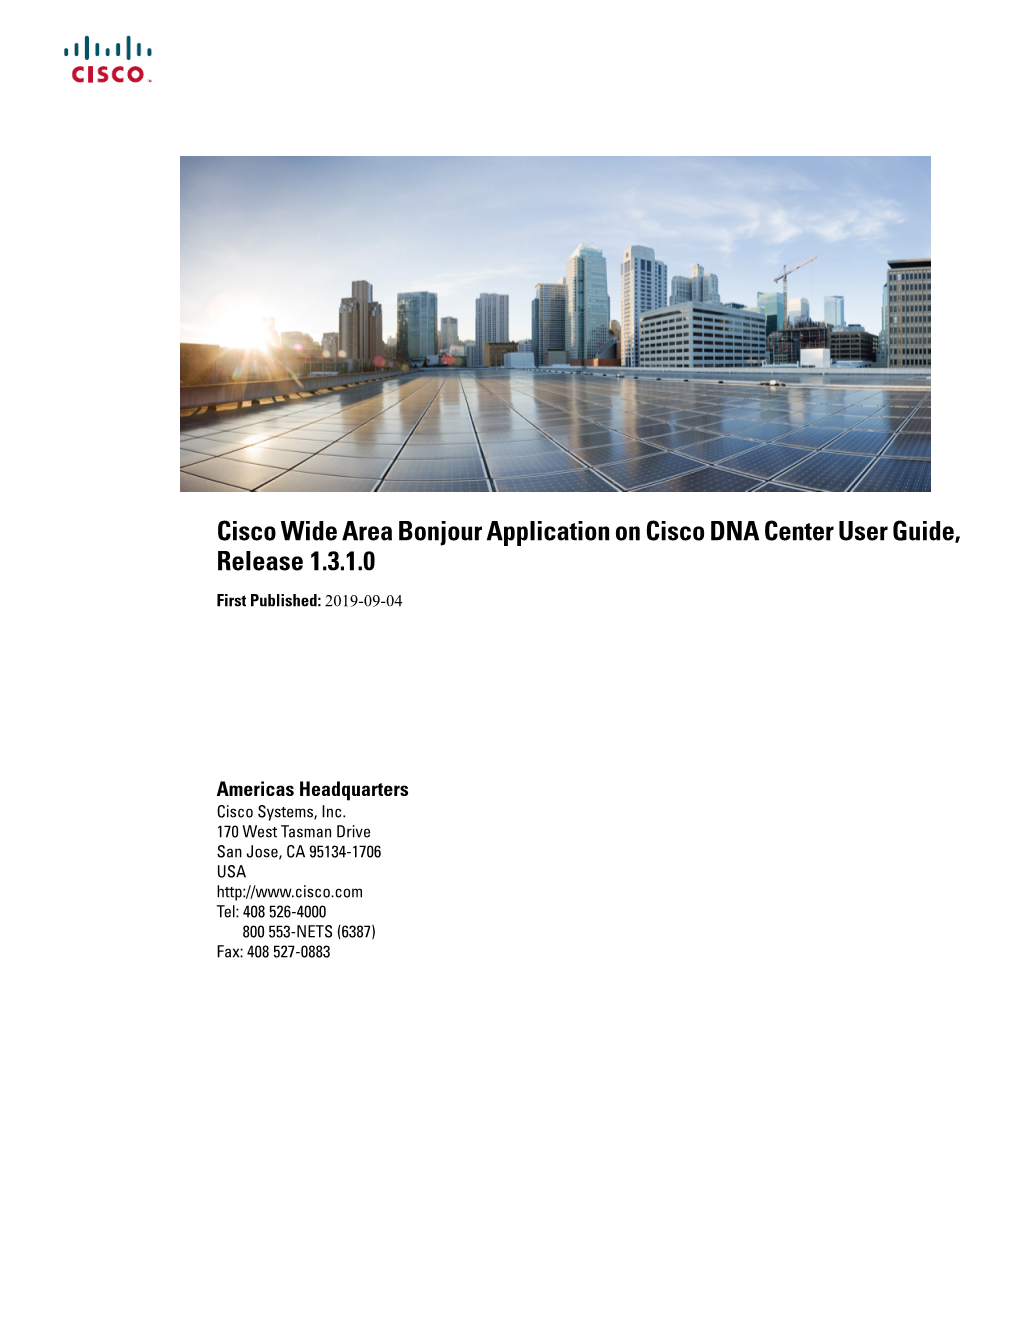 Cisco Wide Area Bonjour Application on Cisco DNA Center User Guide, Release 1.3.1.0